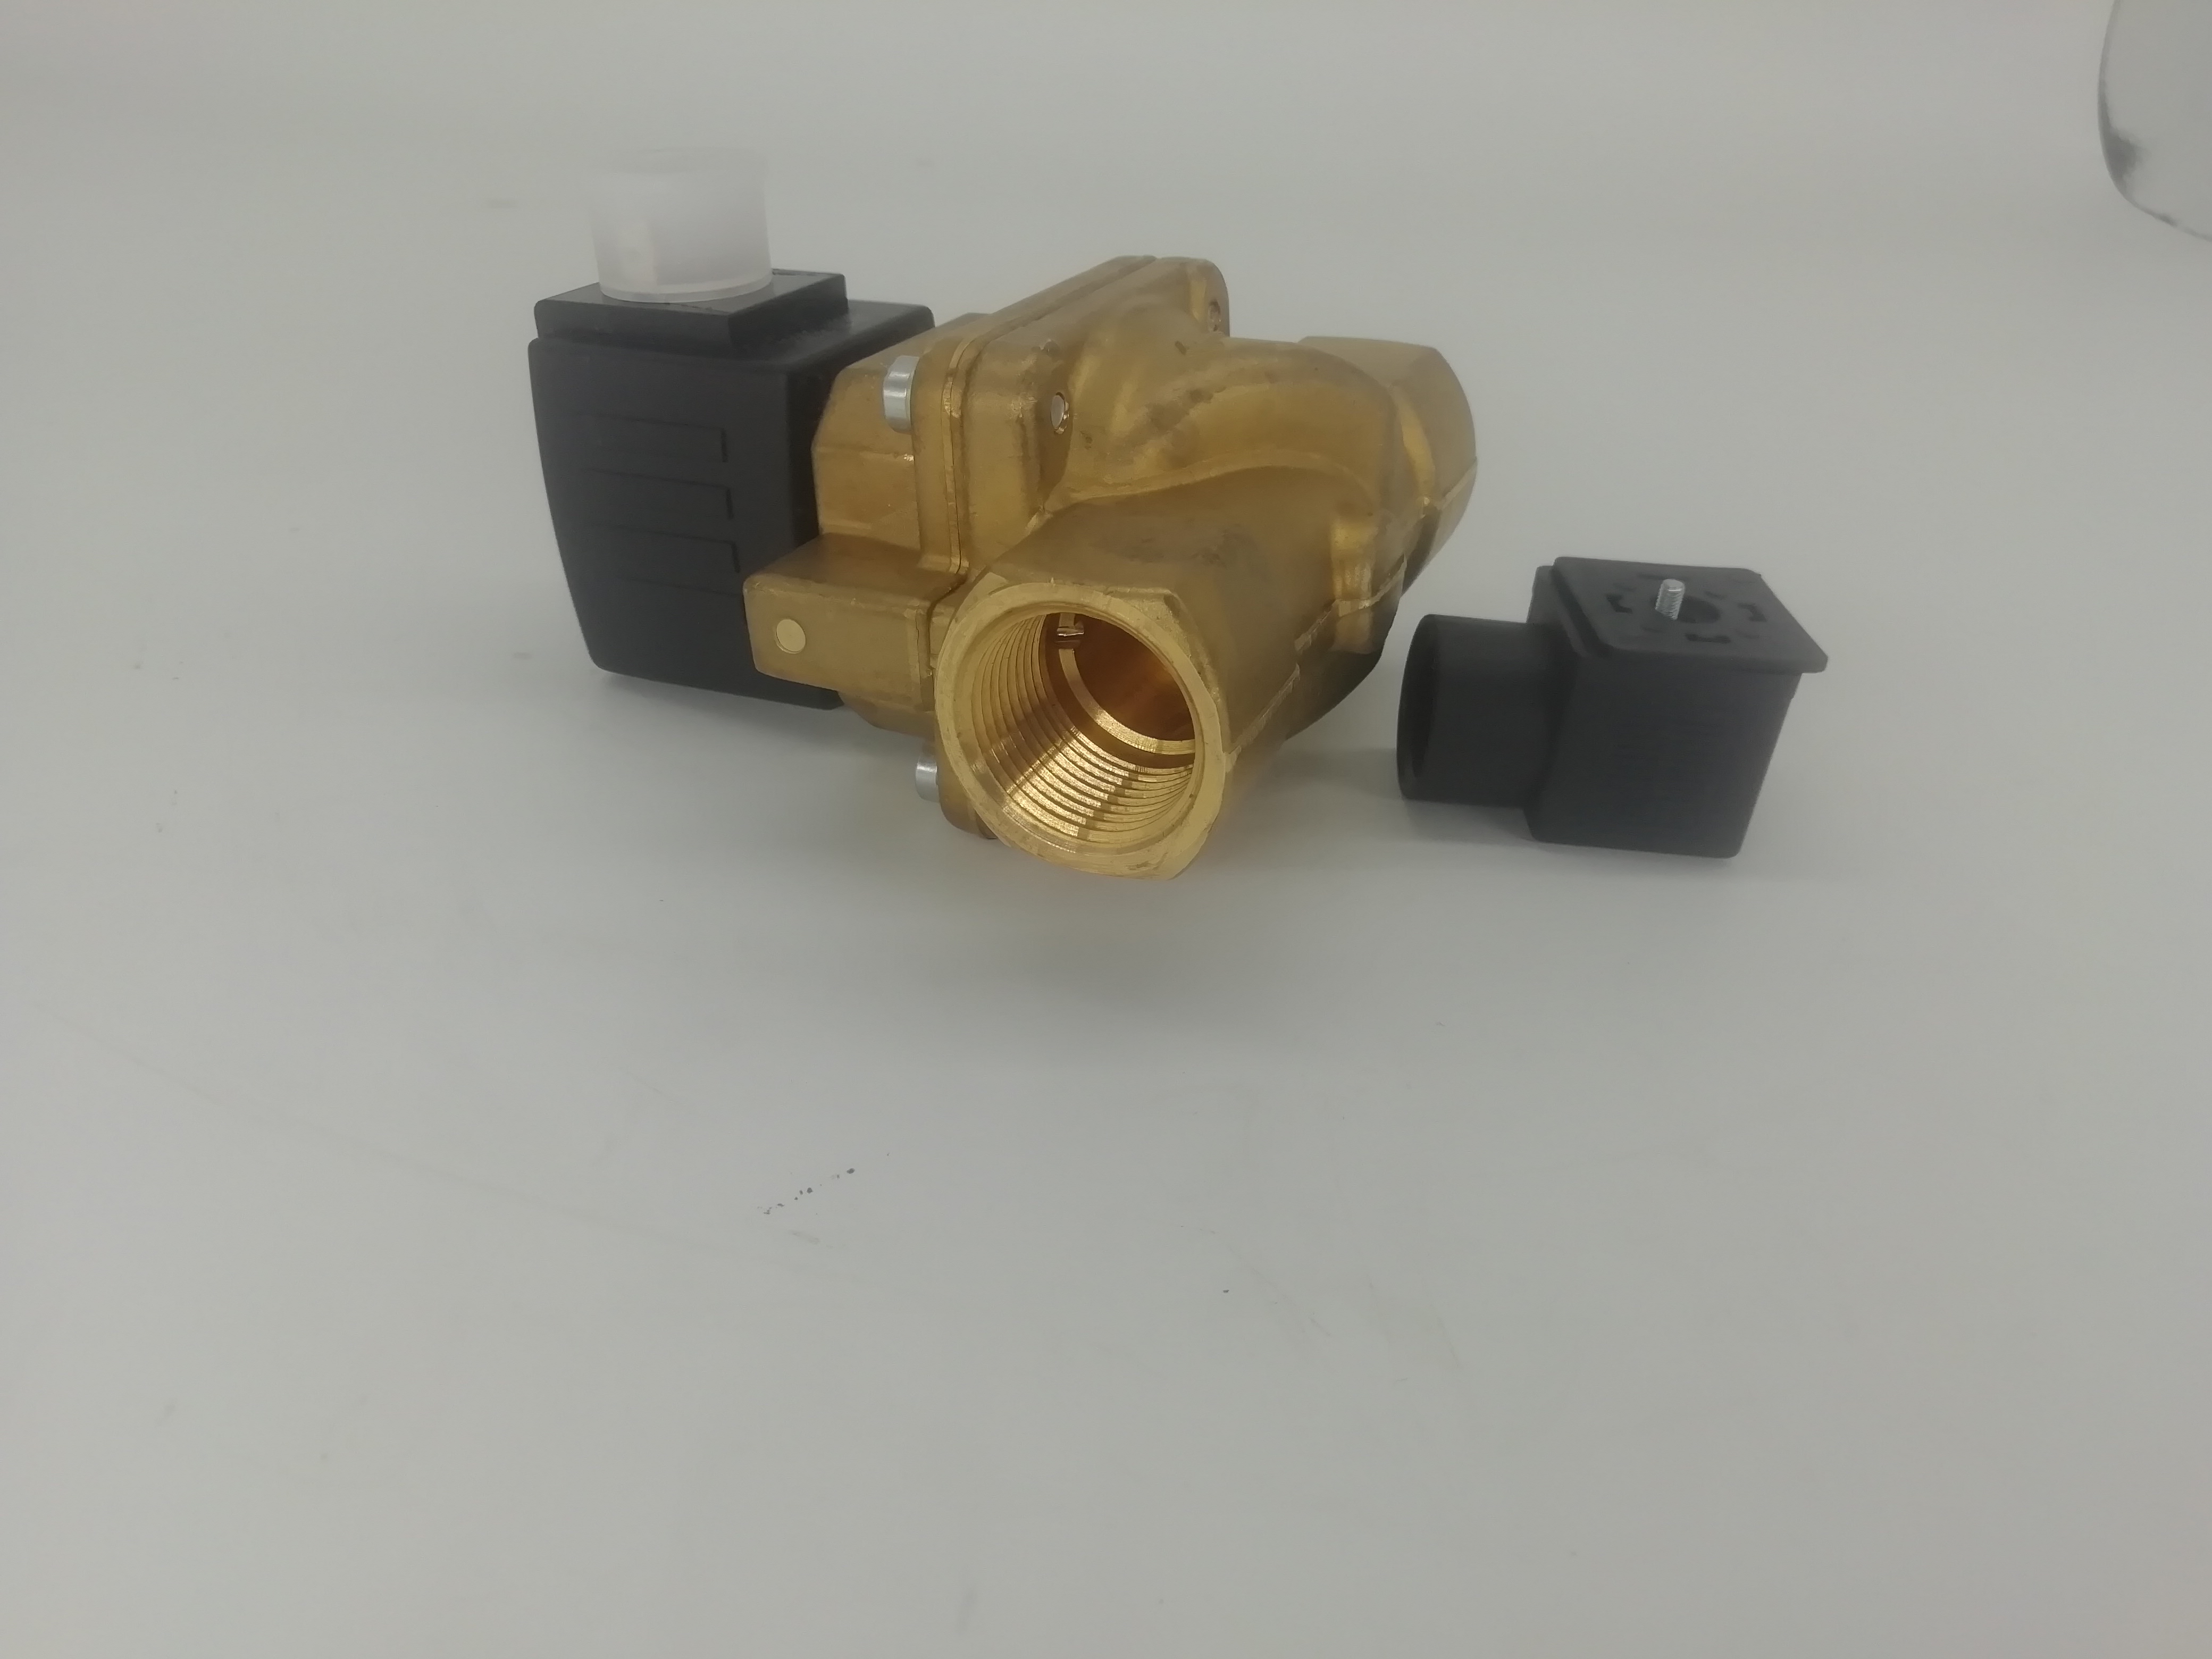 Ingersoll Rand Spare Parts Bleed solenoid valve maintenance 42535922